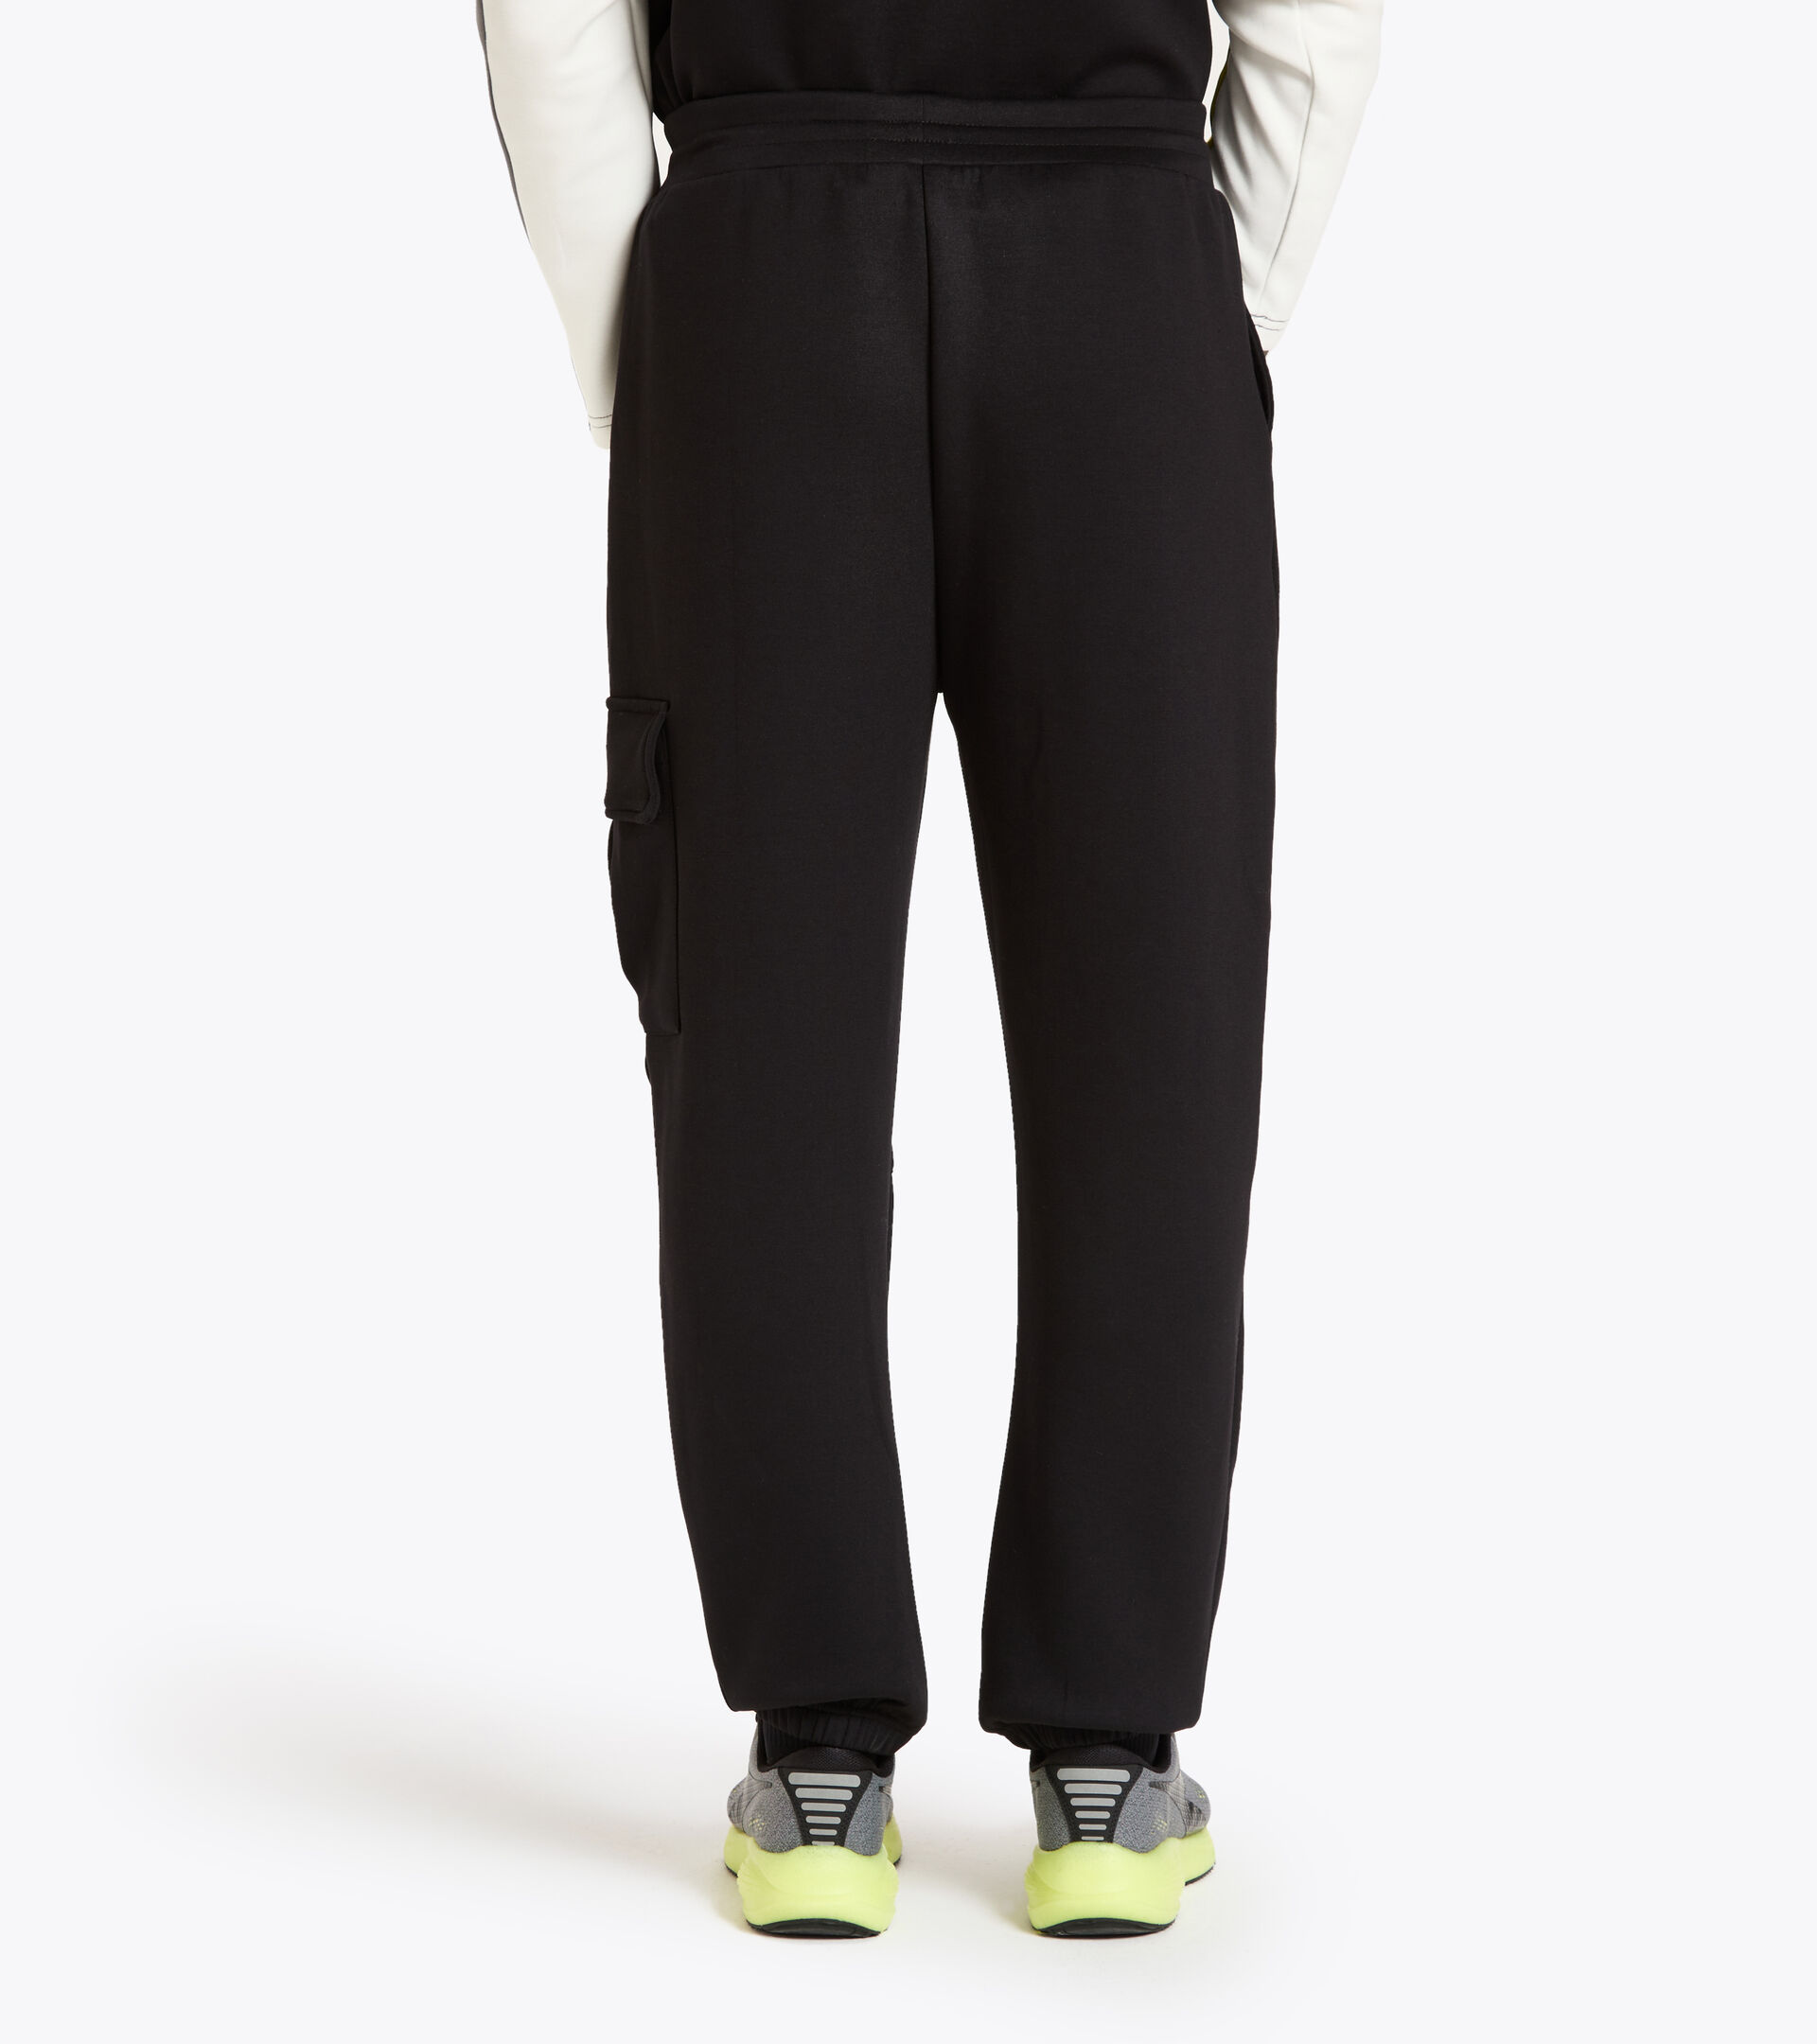 Sports trousers for men PANTS BUDDYFIT BLACK - Diadora